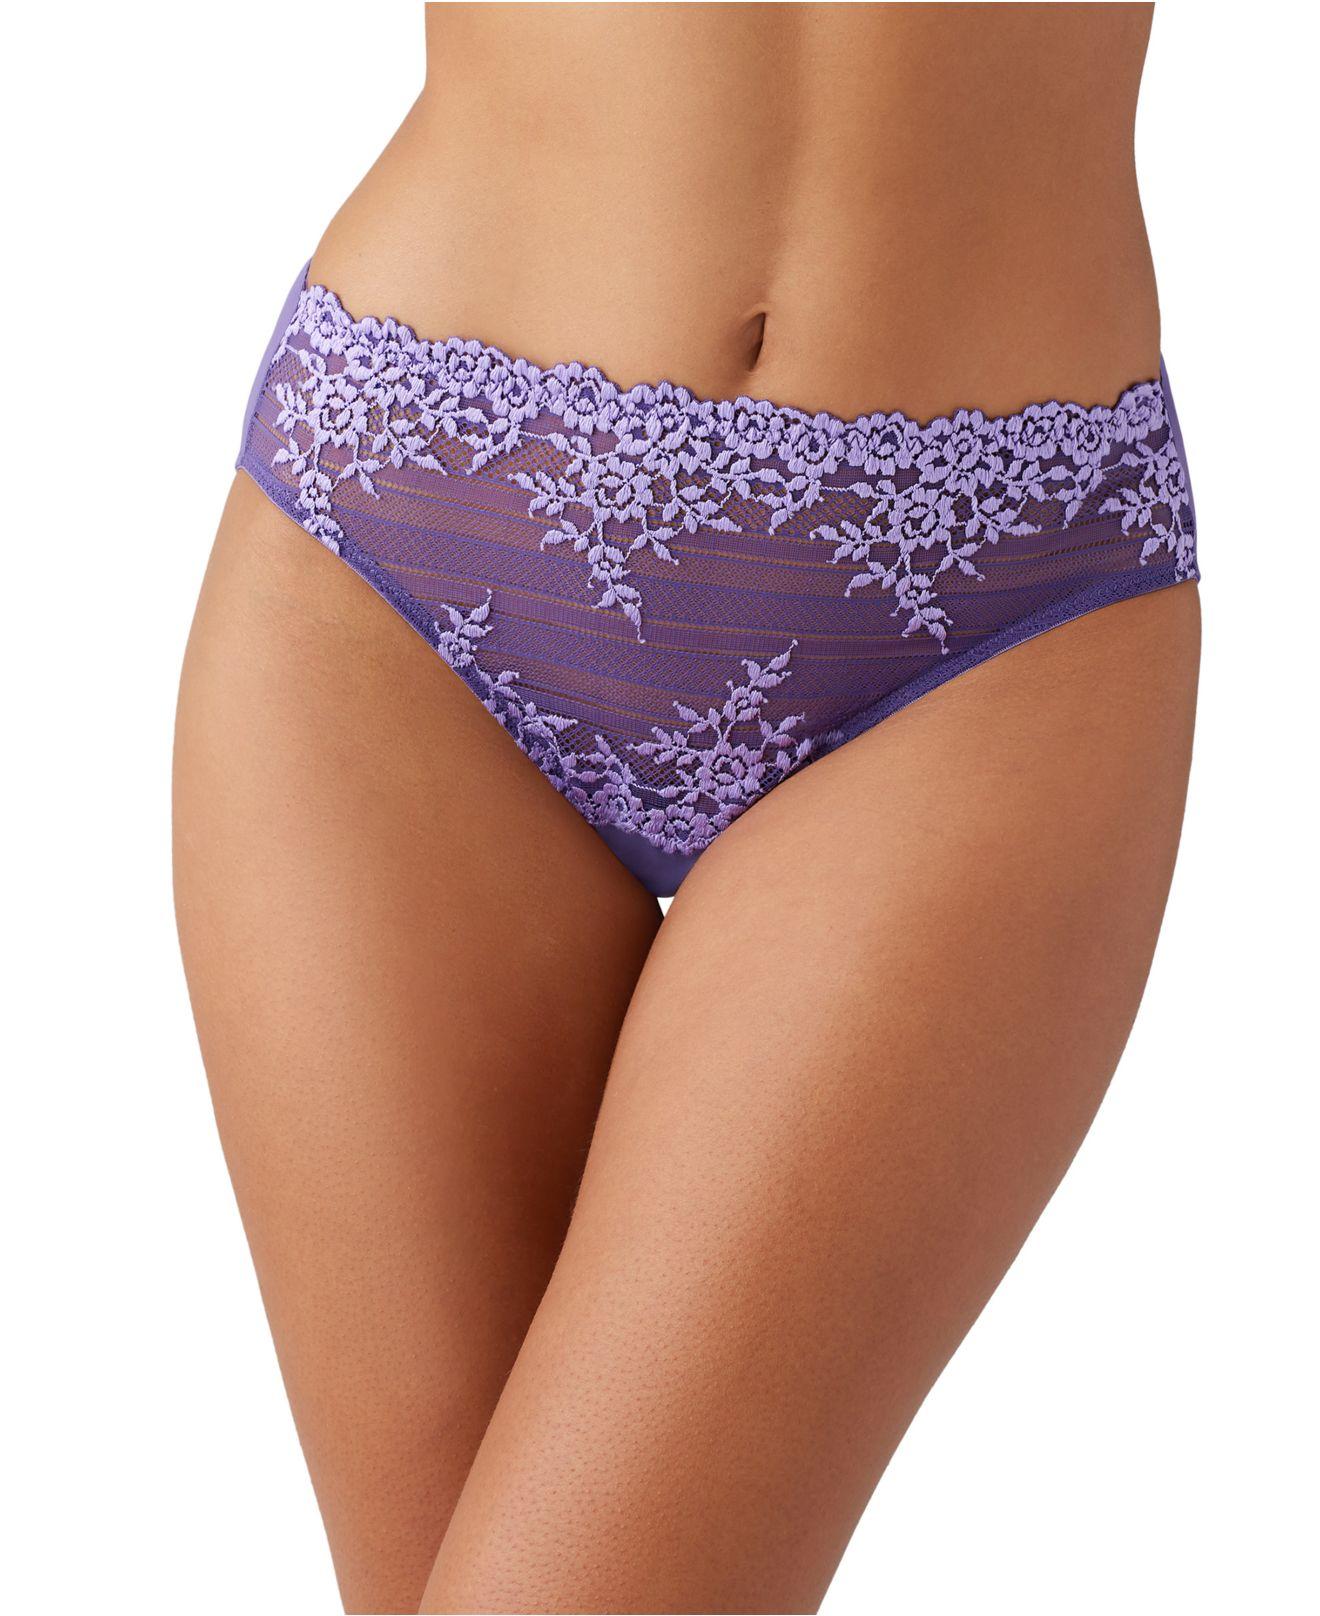 Wacoal ® Embrace Lace Hi Cut Embroidered Brief Underwear Lingerie 841191 in  Purple